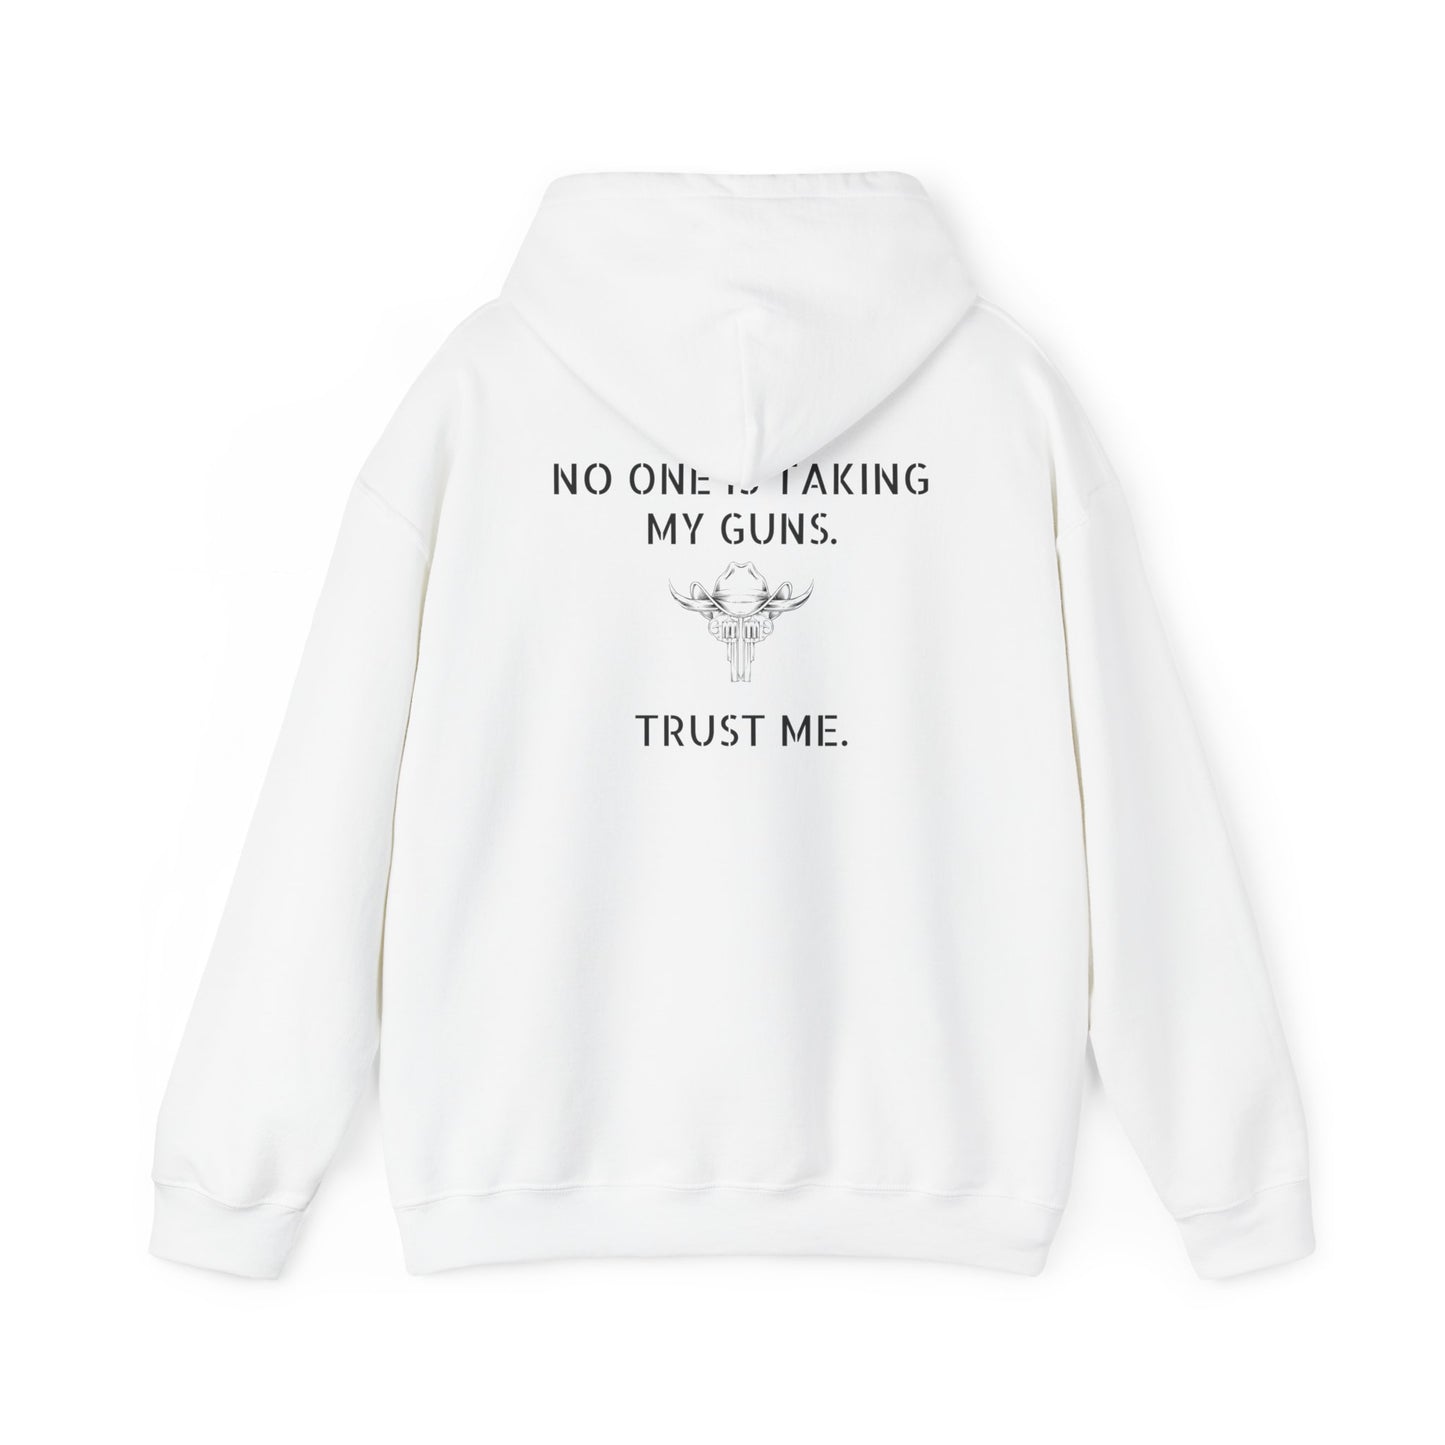 "NO ONE IS TAKING MY GUNS" Hooded Sweatshirt